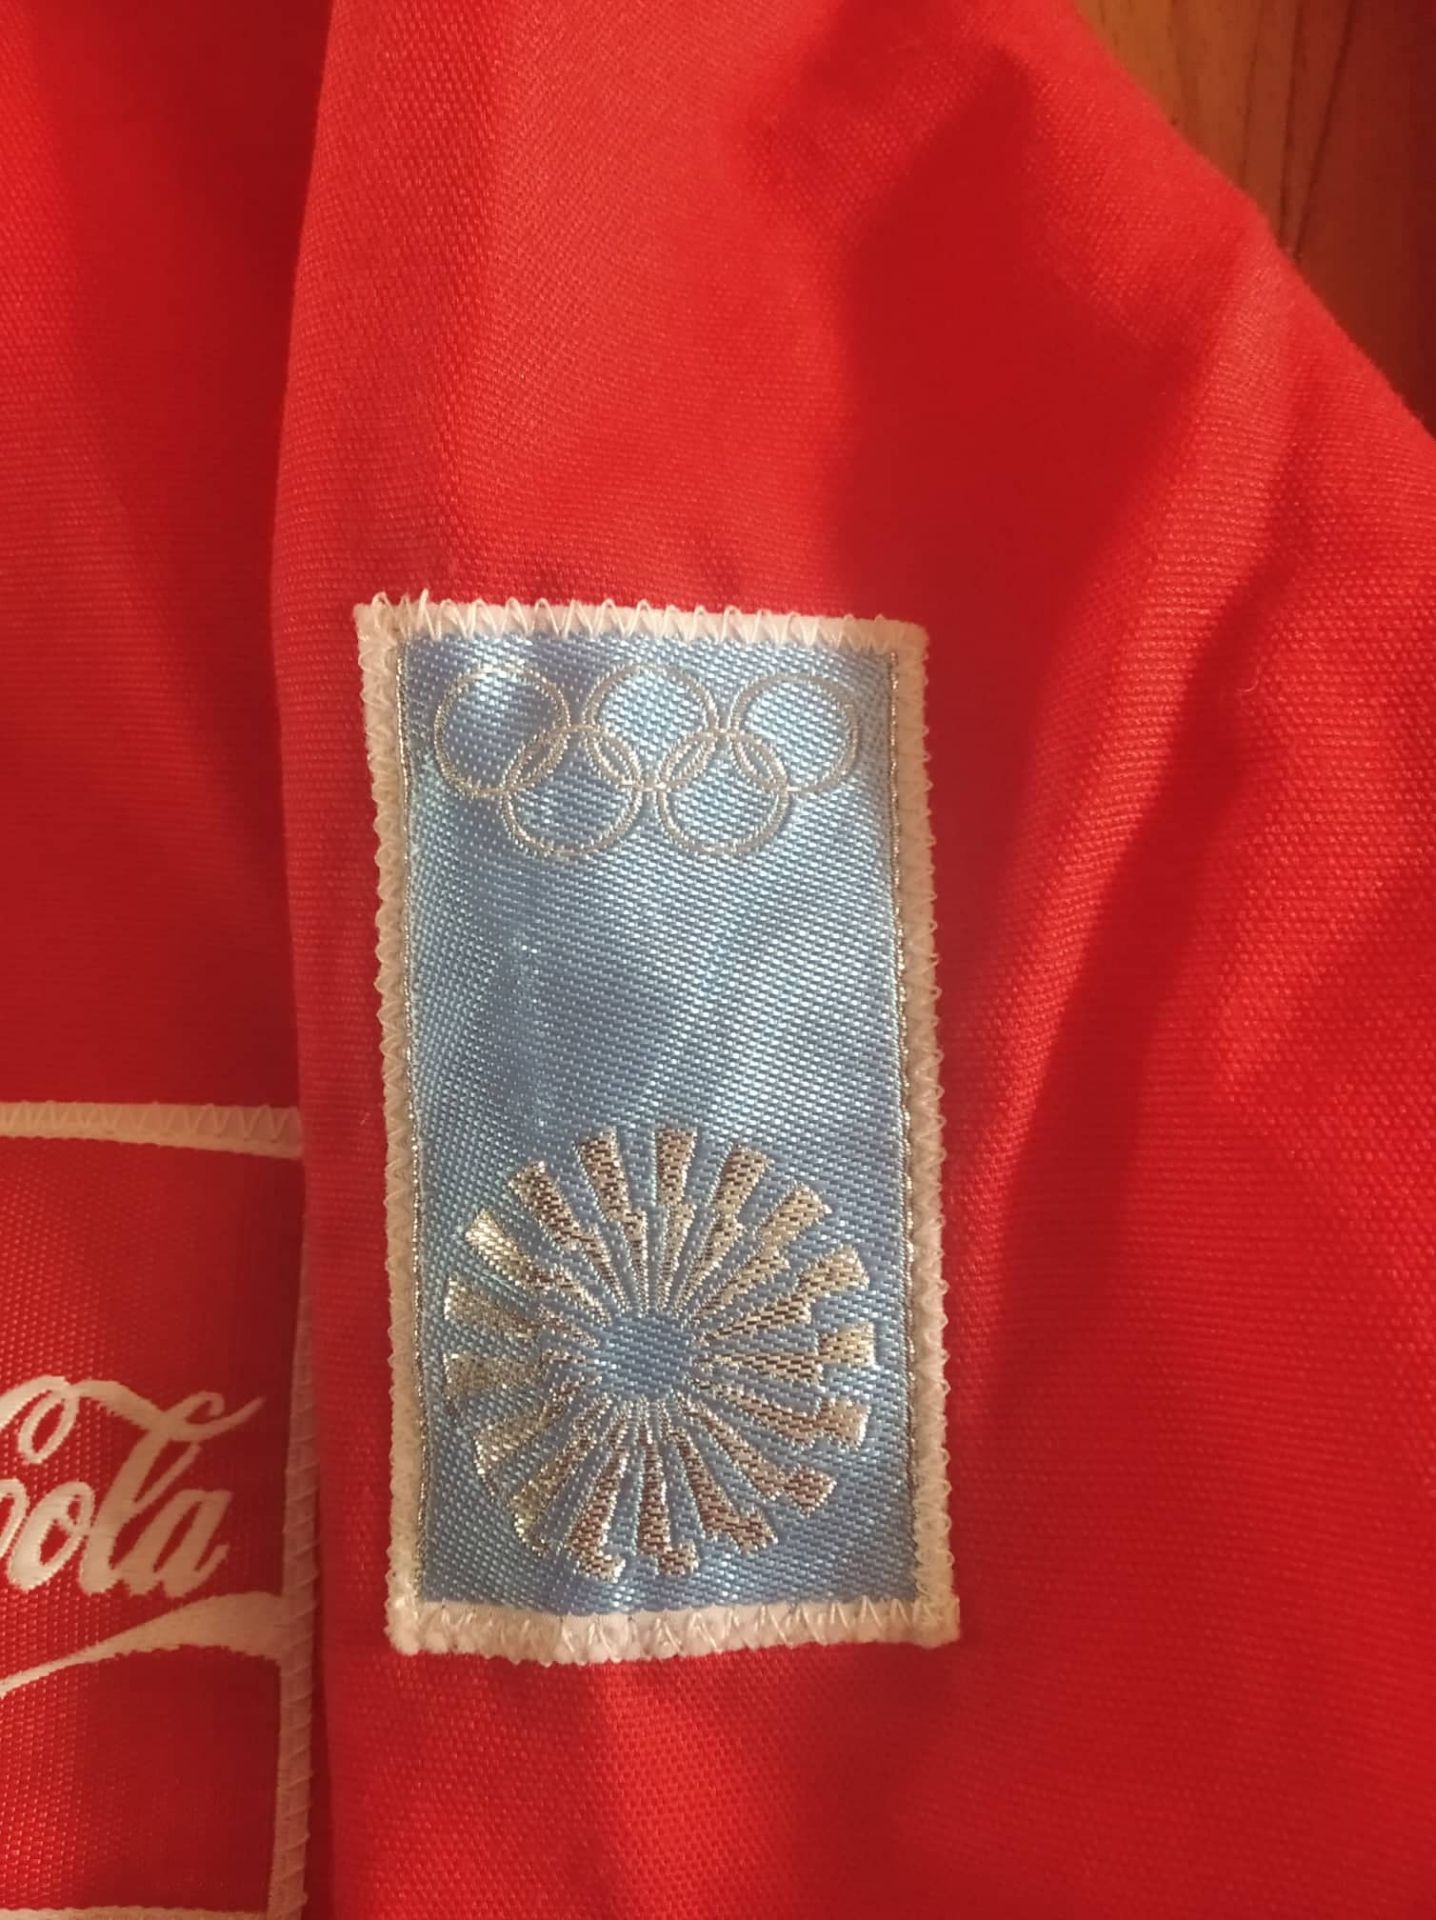 Coca-Cola Uniform | 1972 Olympic Games München - Bild 3 aus 8